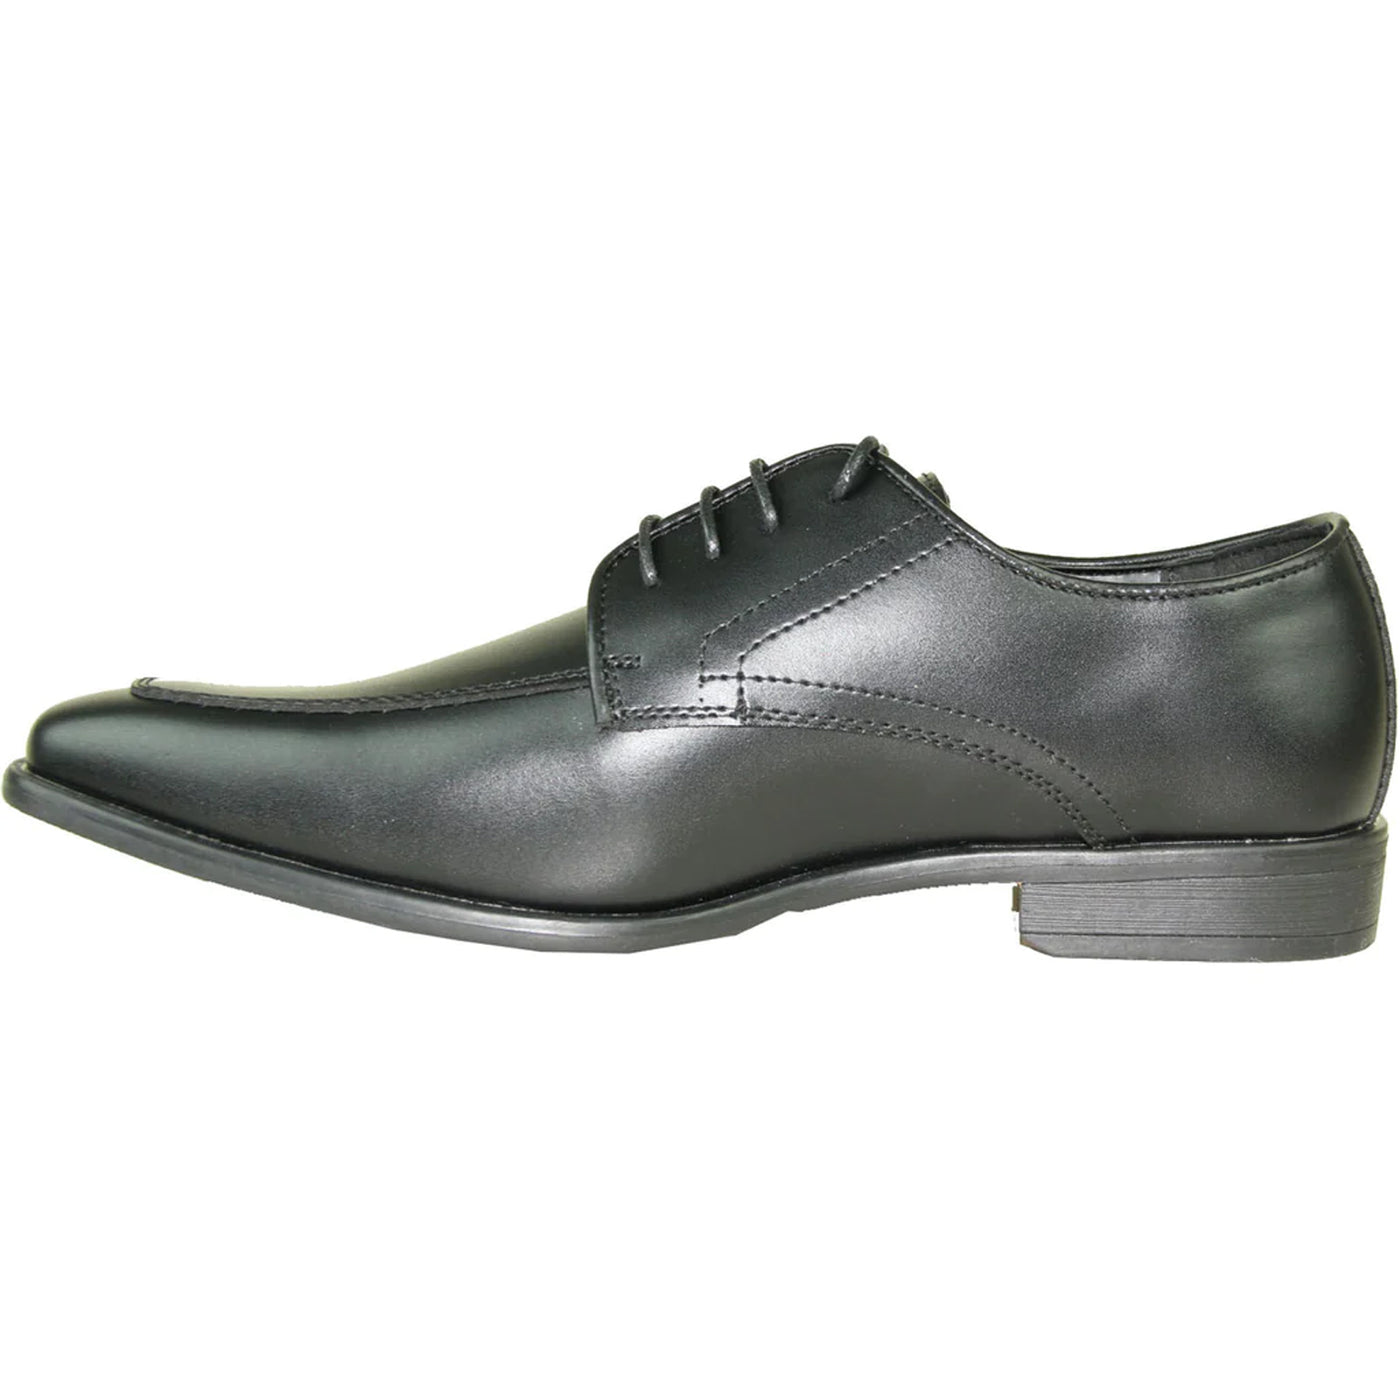 Mens Formal Oxford Lace Up Dress & Tuxedo Shoe in Matte Black